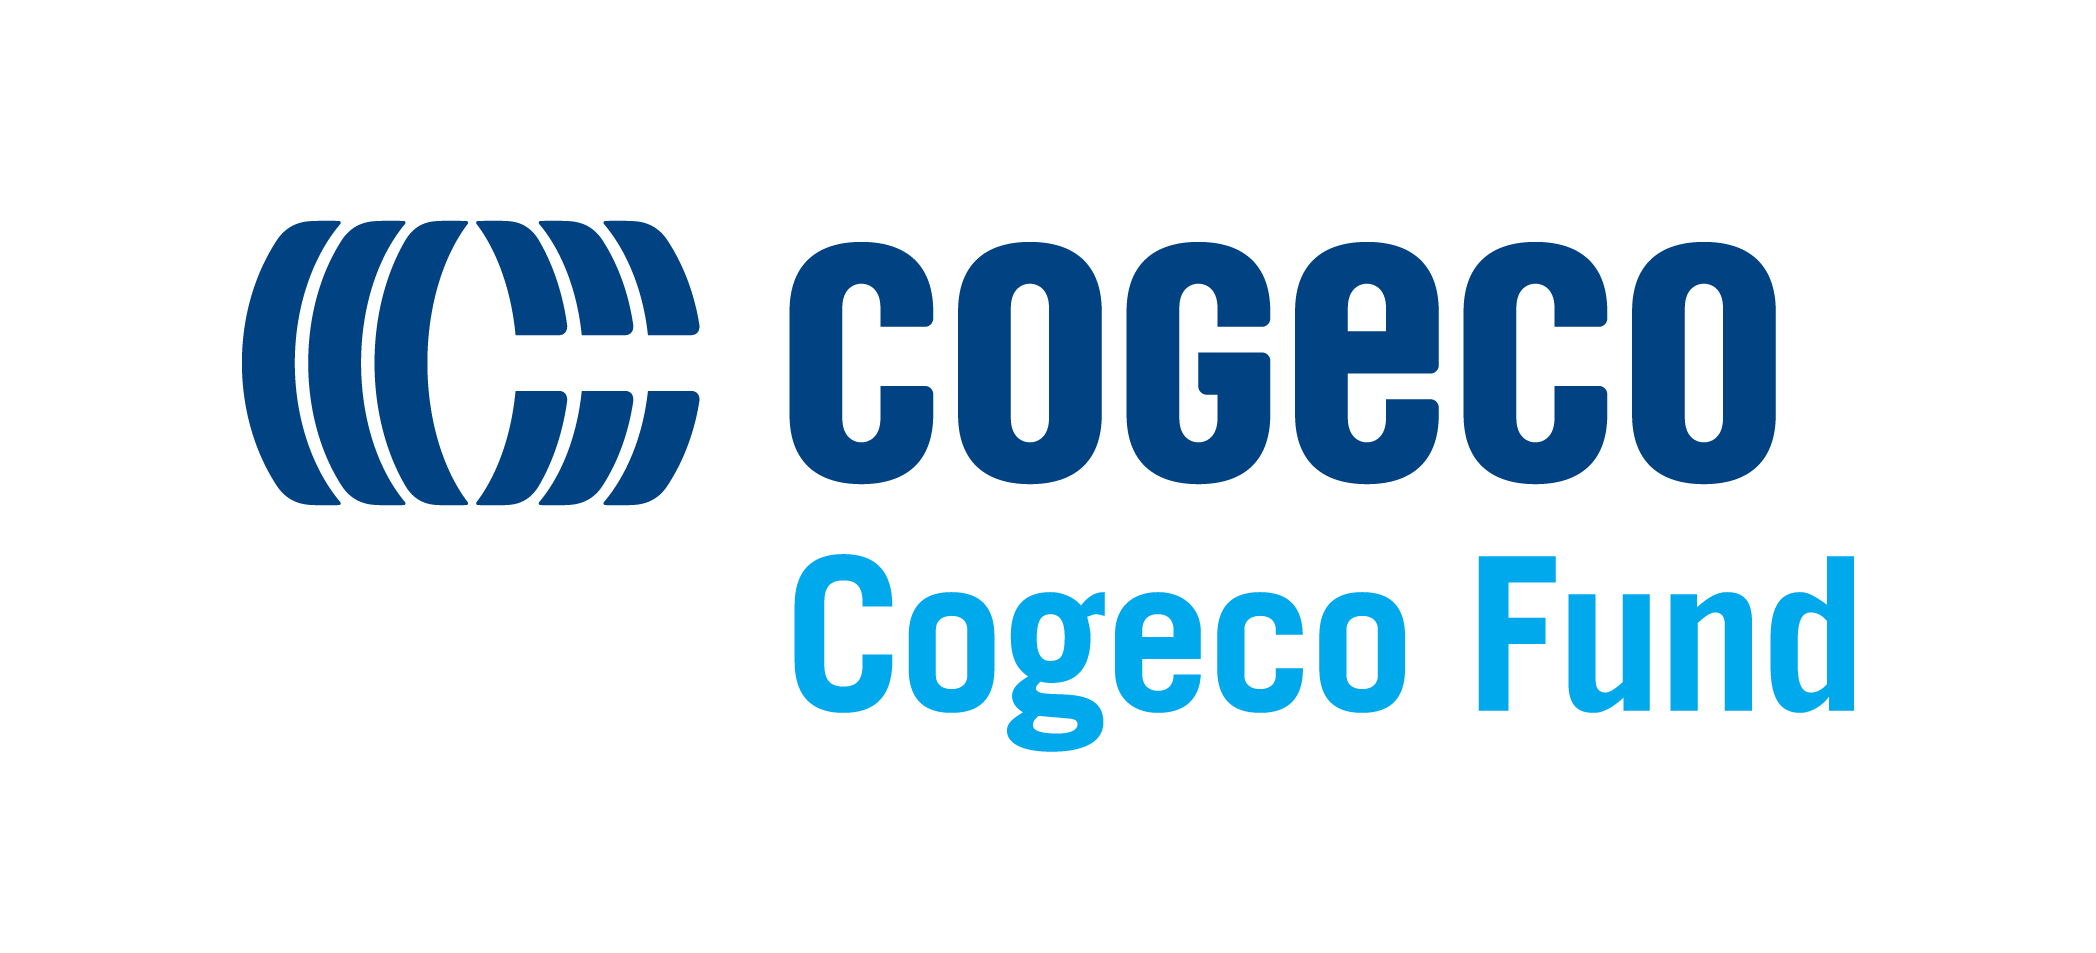 Bell Fund Logo - Cogeco Fund | Logos - Cogeco Fund